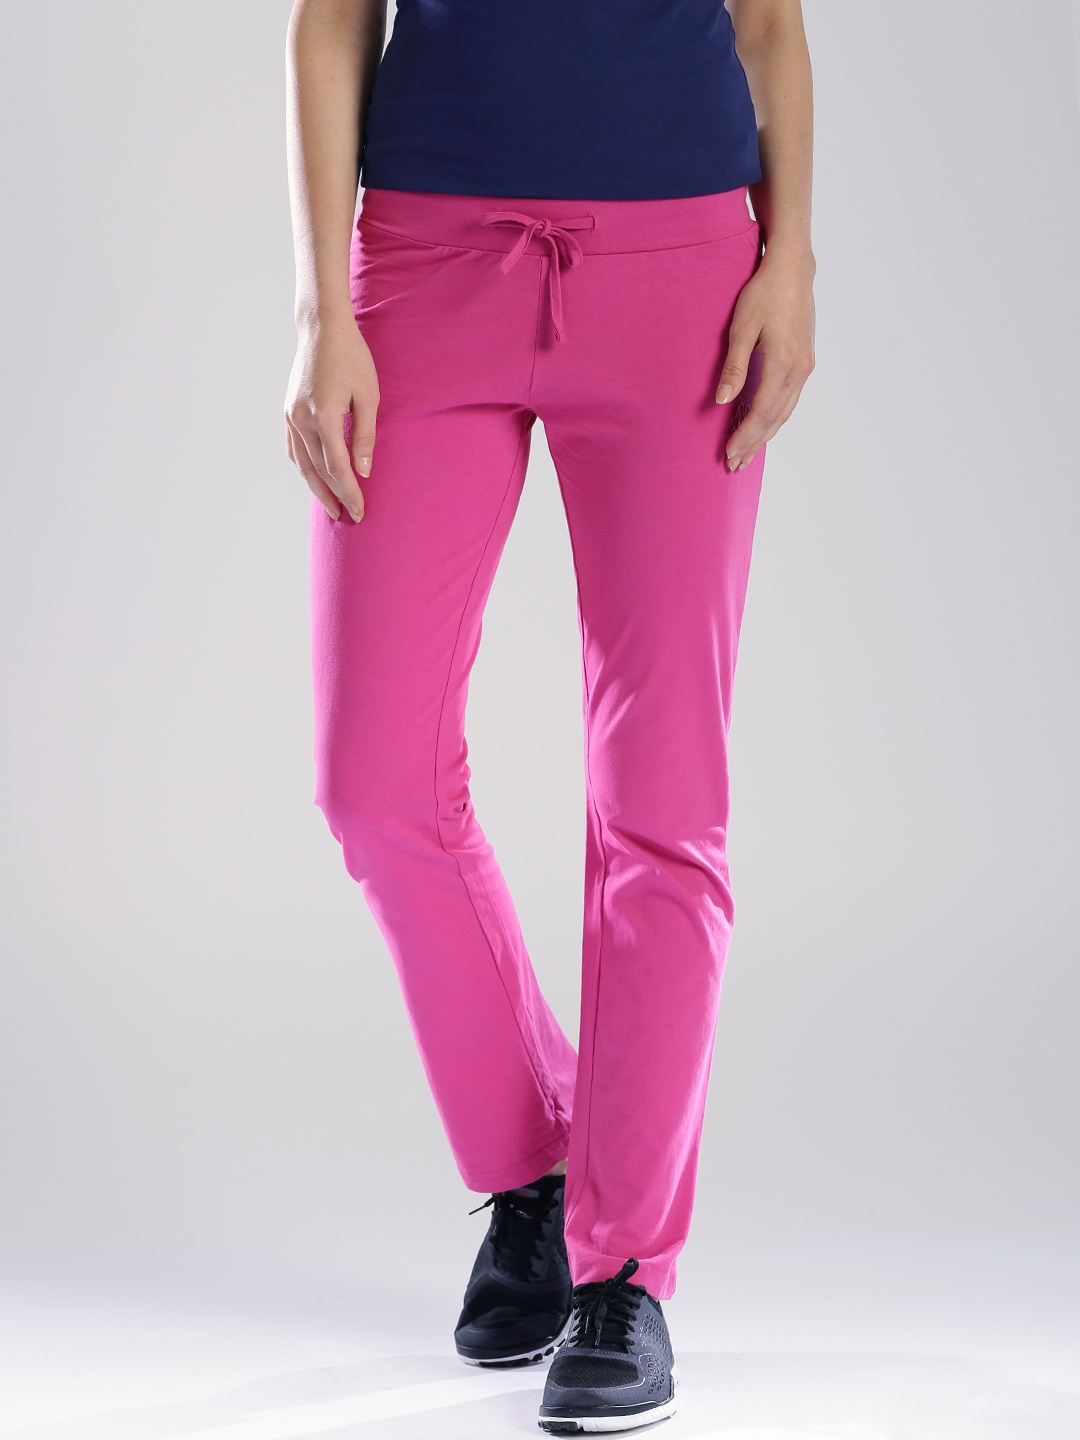 Leraar op school Oriënteren werk Buy Kappa Pink Yoga Trousers - Trousers for Women 1119535 | Myntra